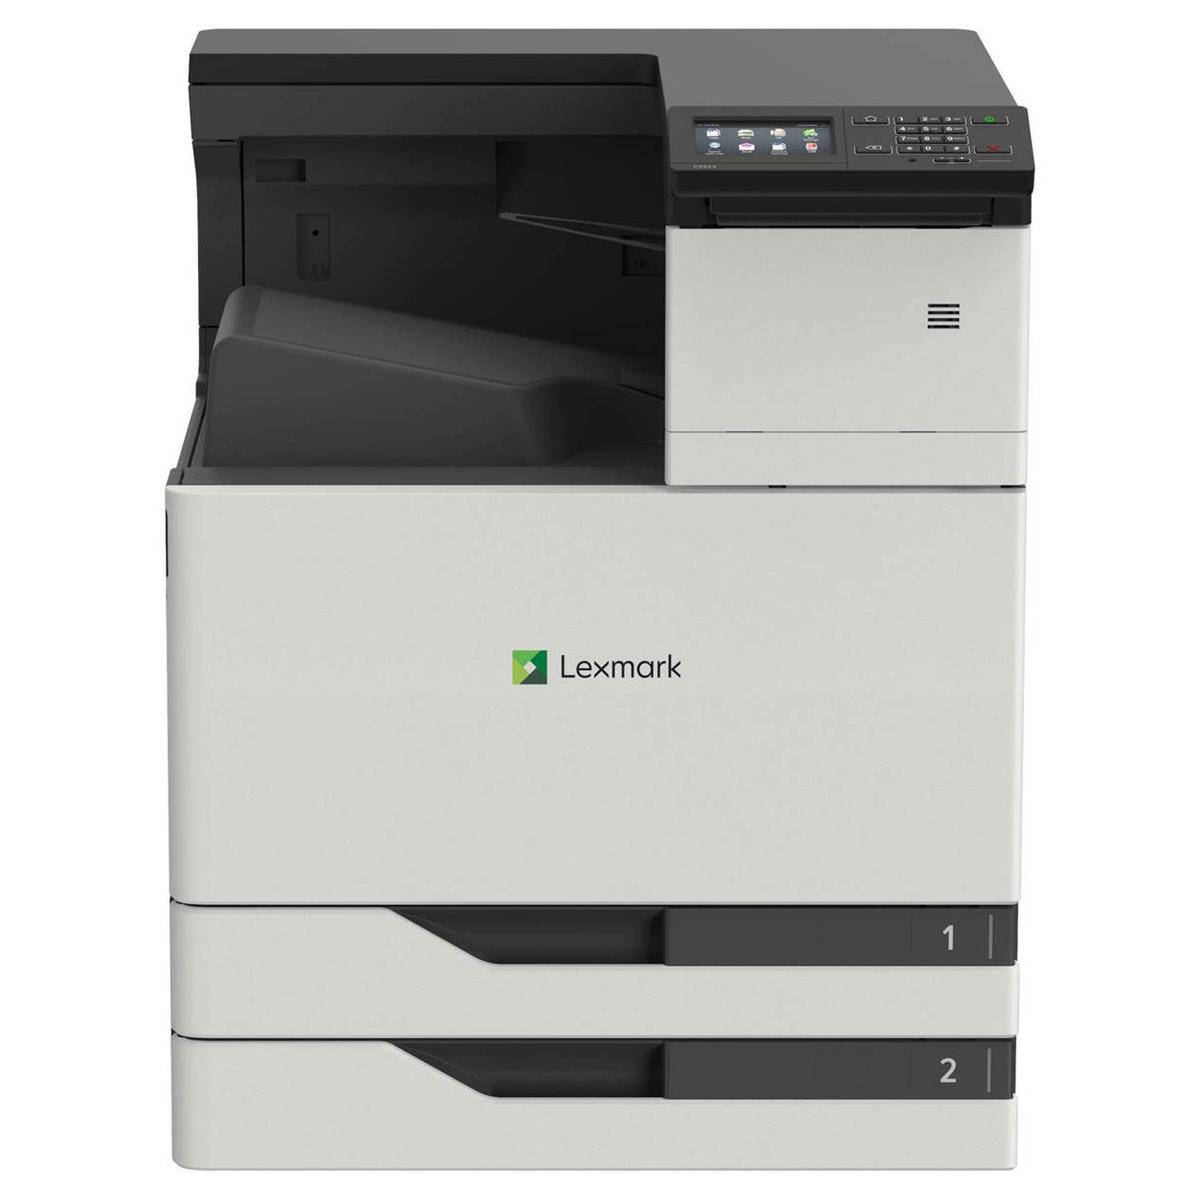 Image of Lexmark CS921de Color Laser Printer